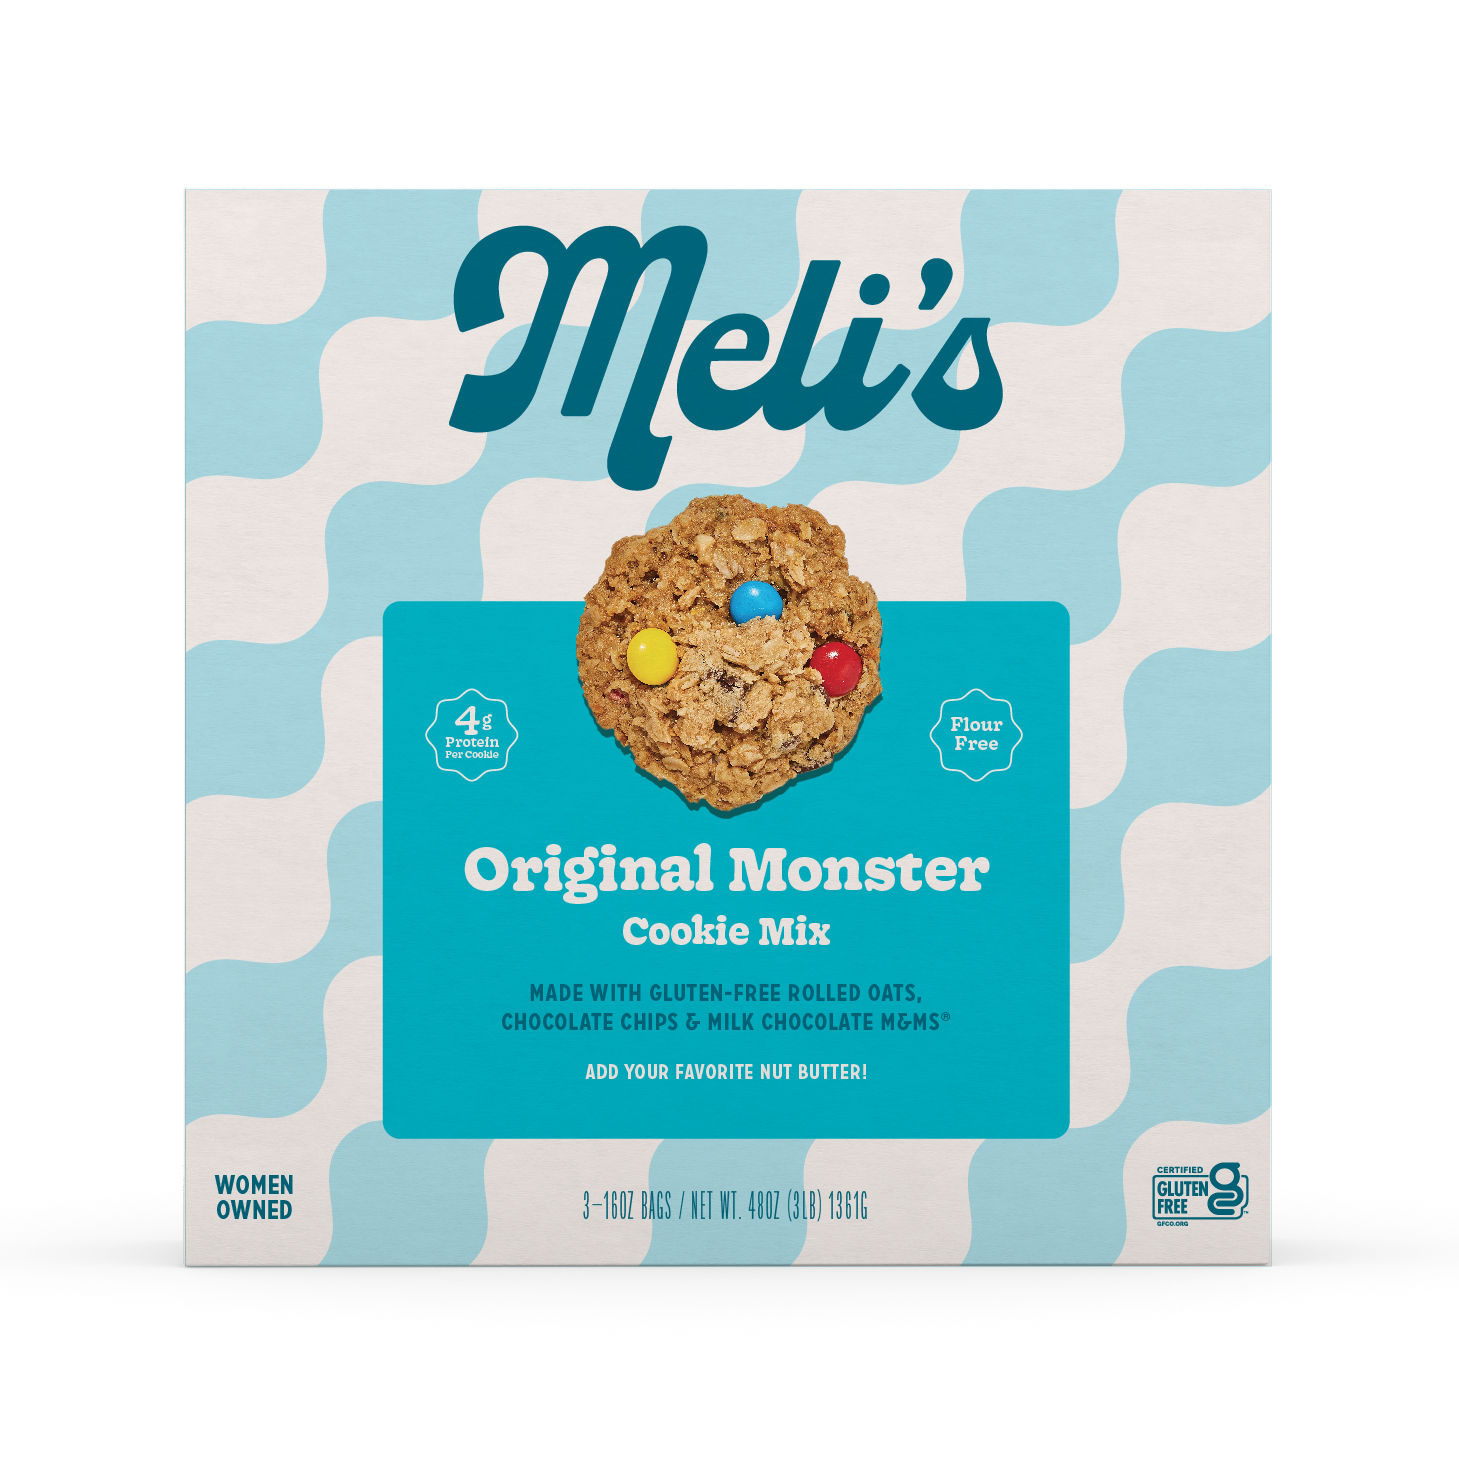 Meli's Monster Cookies Expands into Costco | Nosh.com